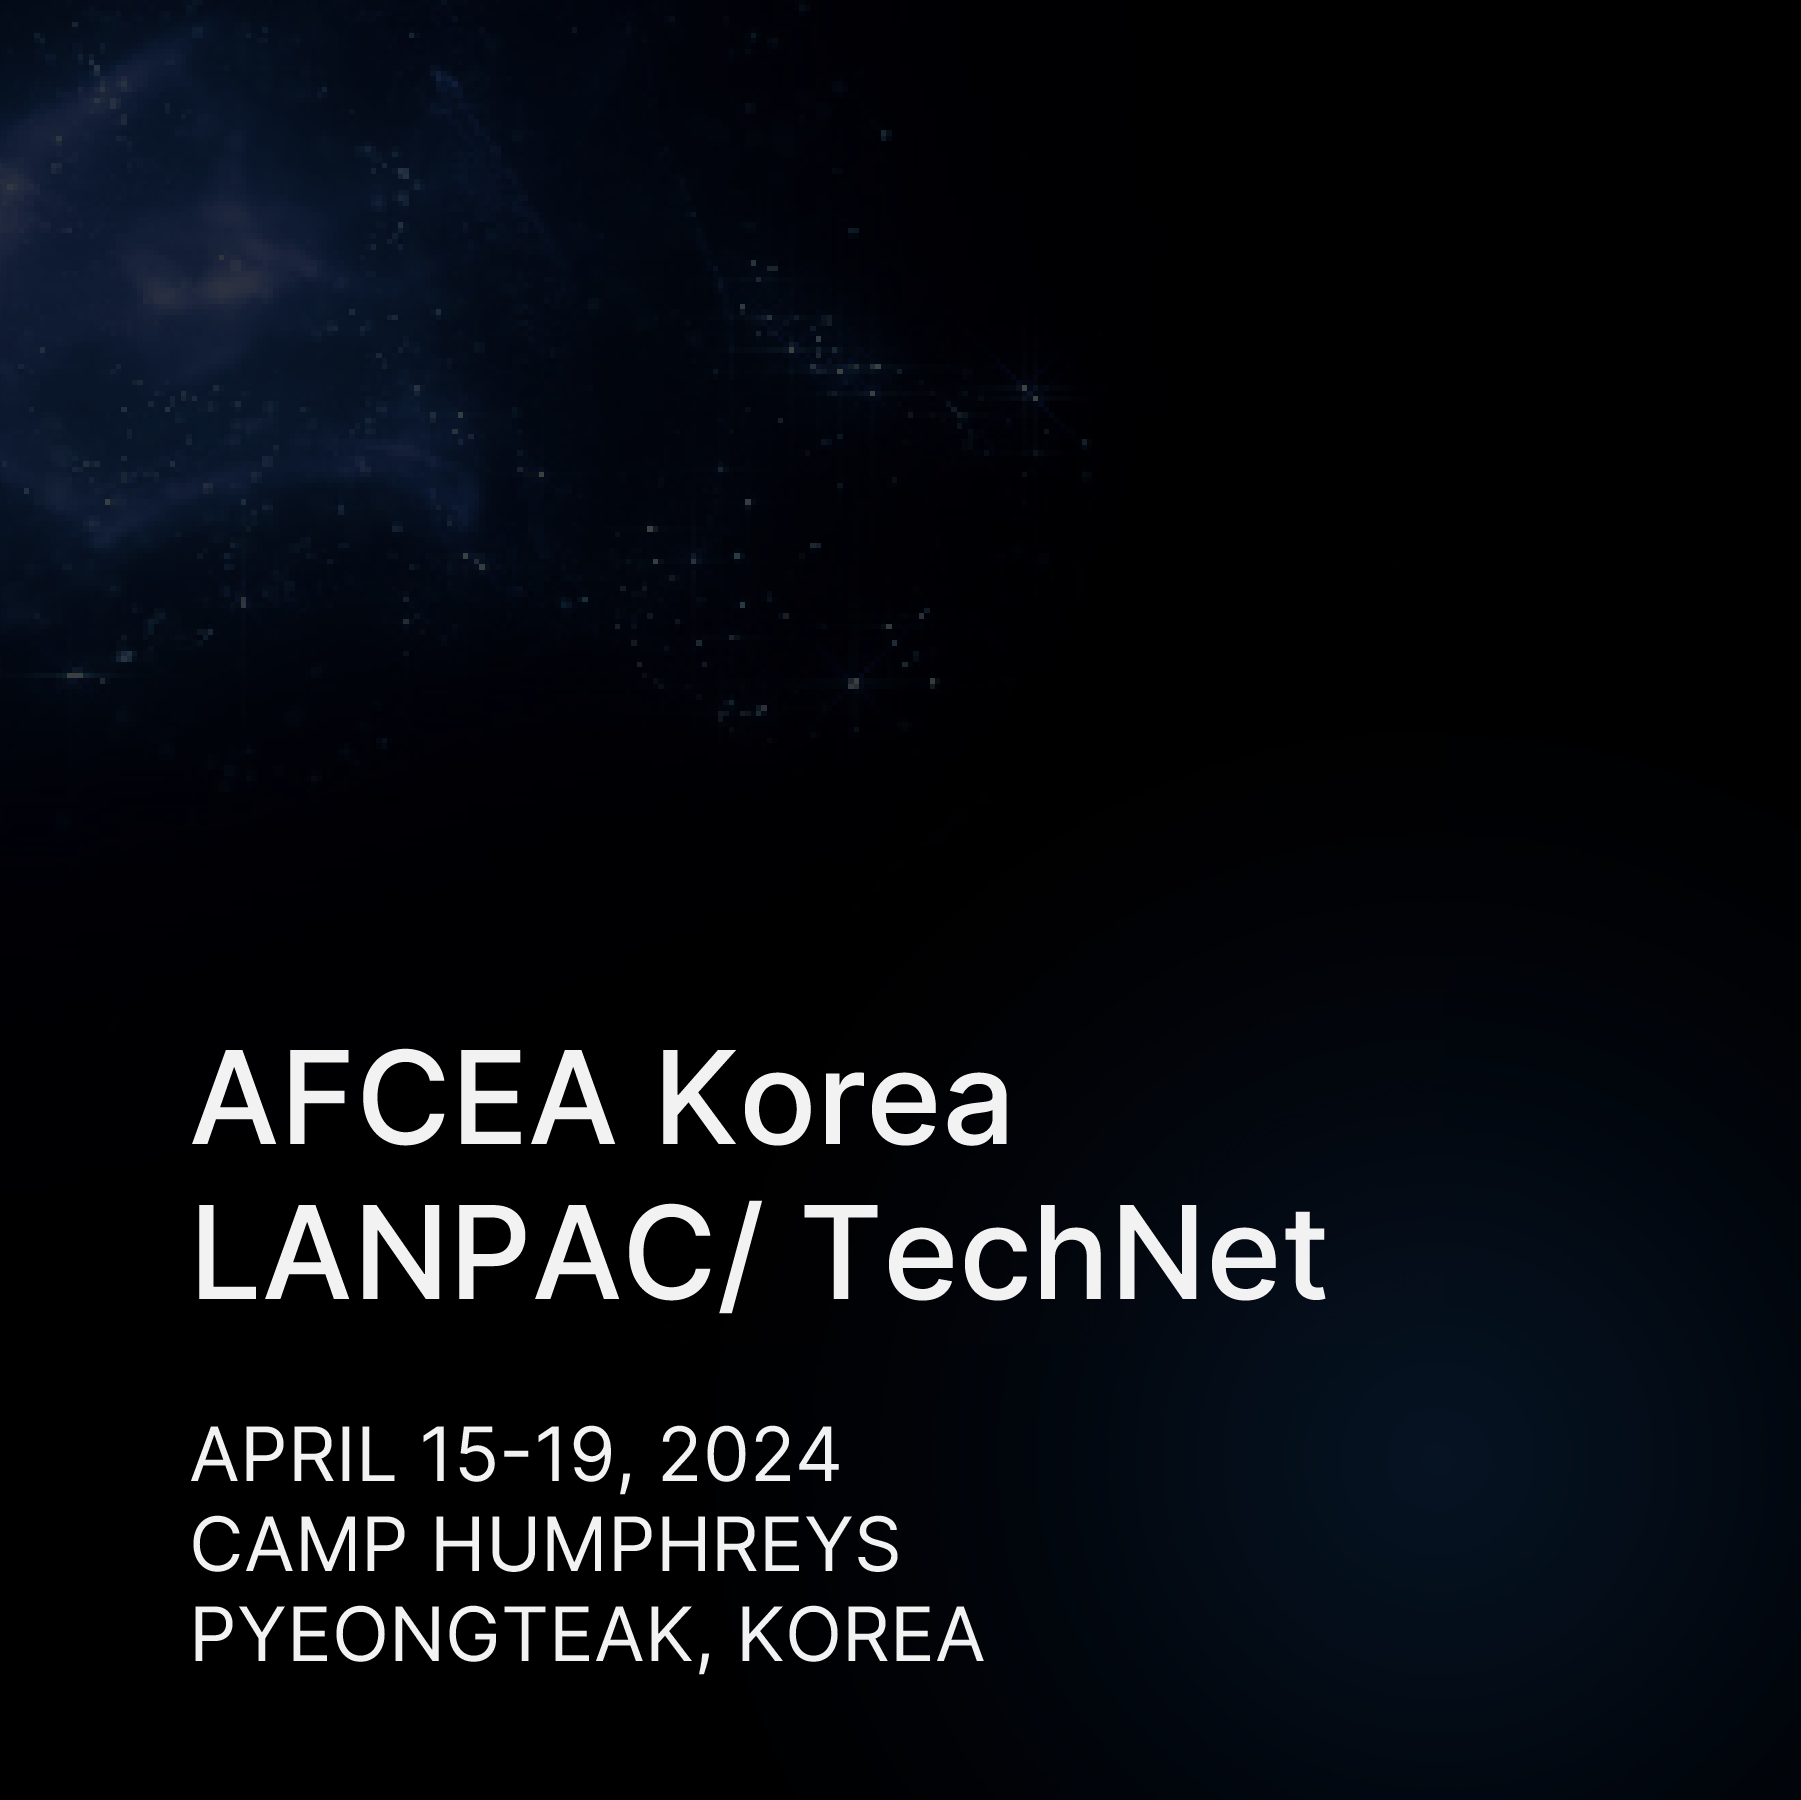 AFCEA Korea LANPAC